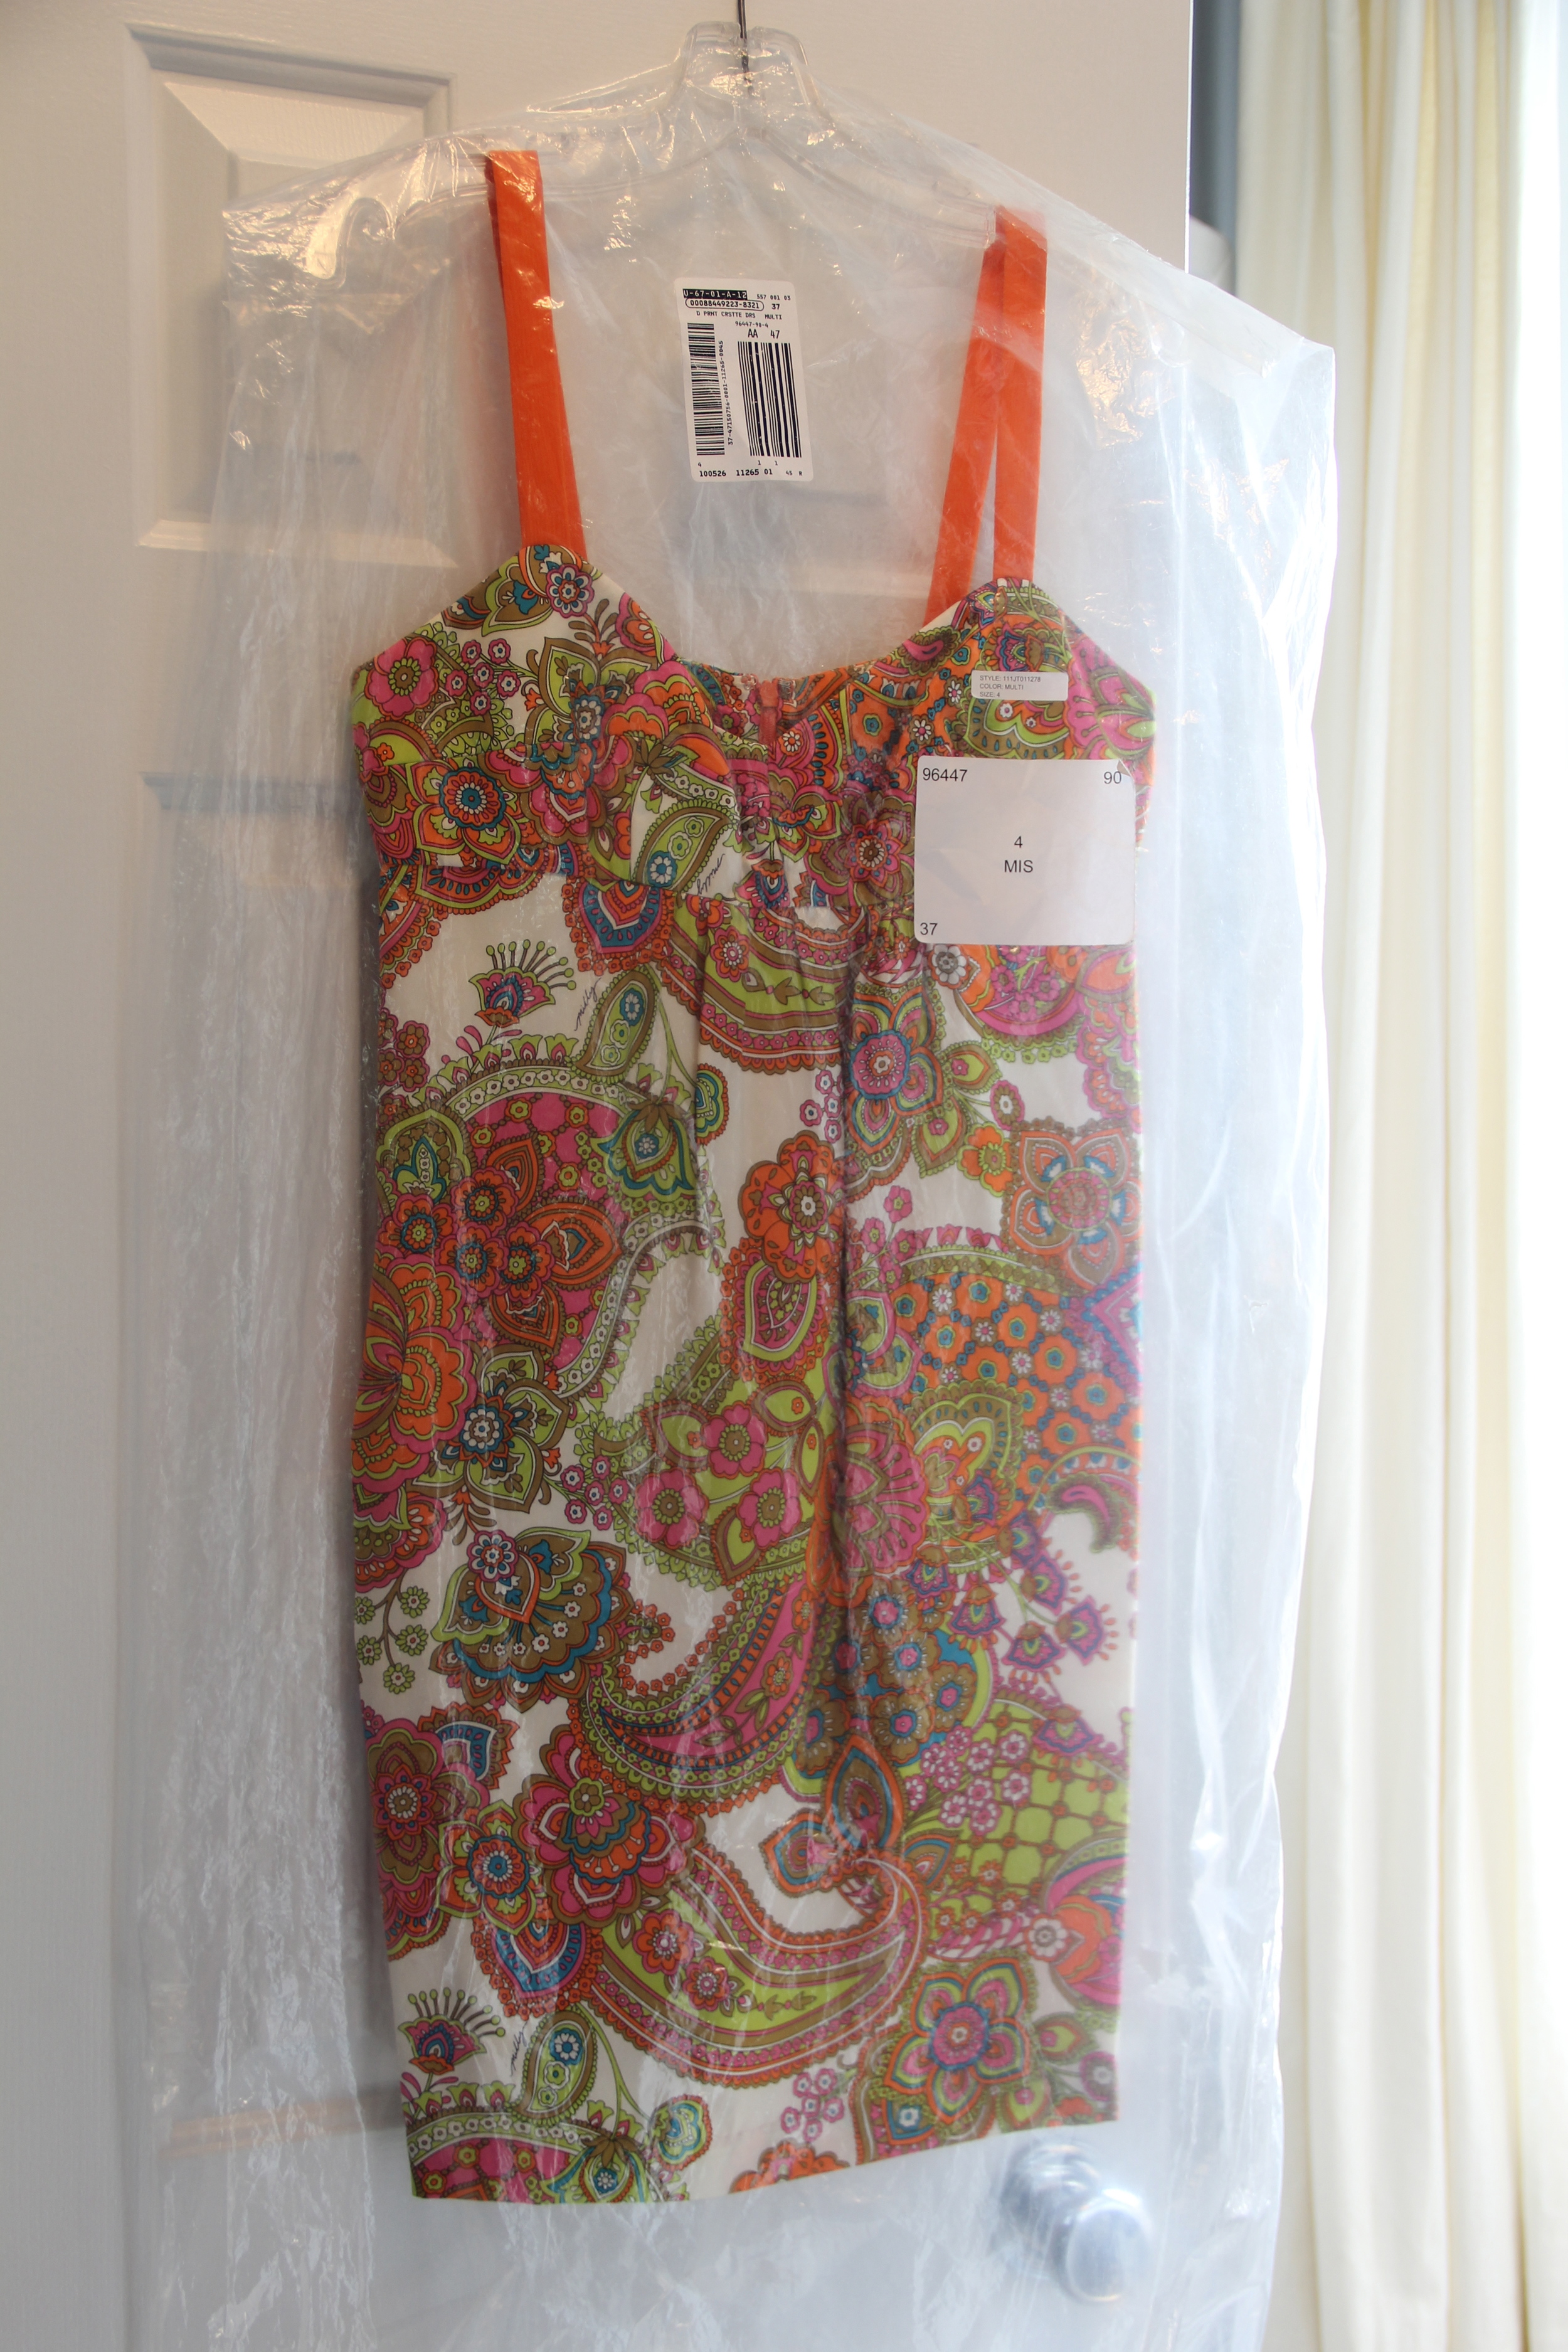 Dress in Hanging Bag.jpg